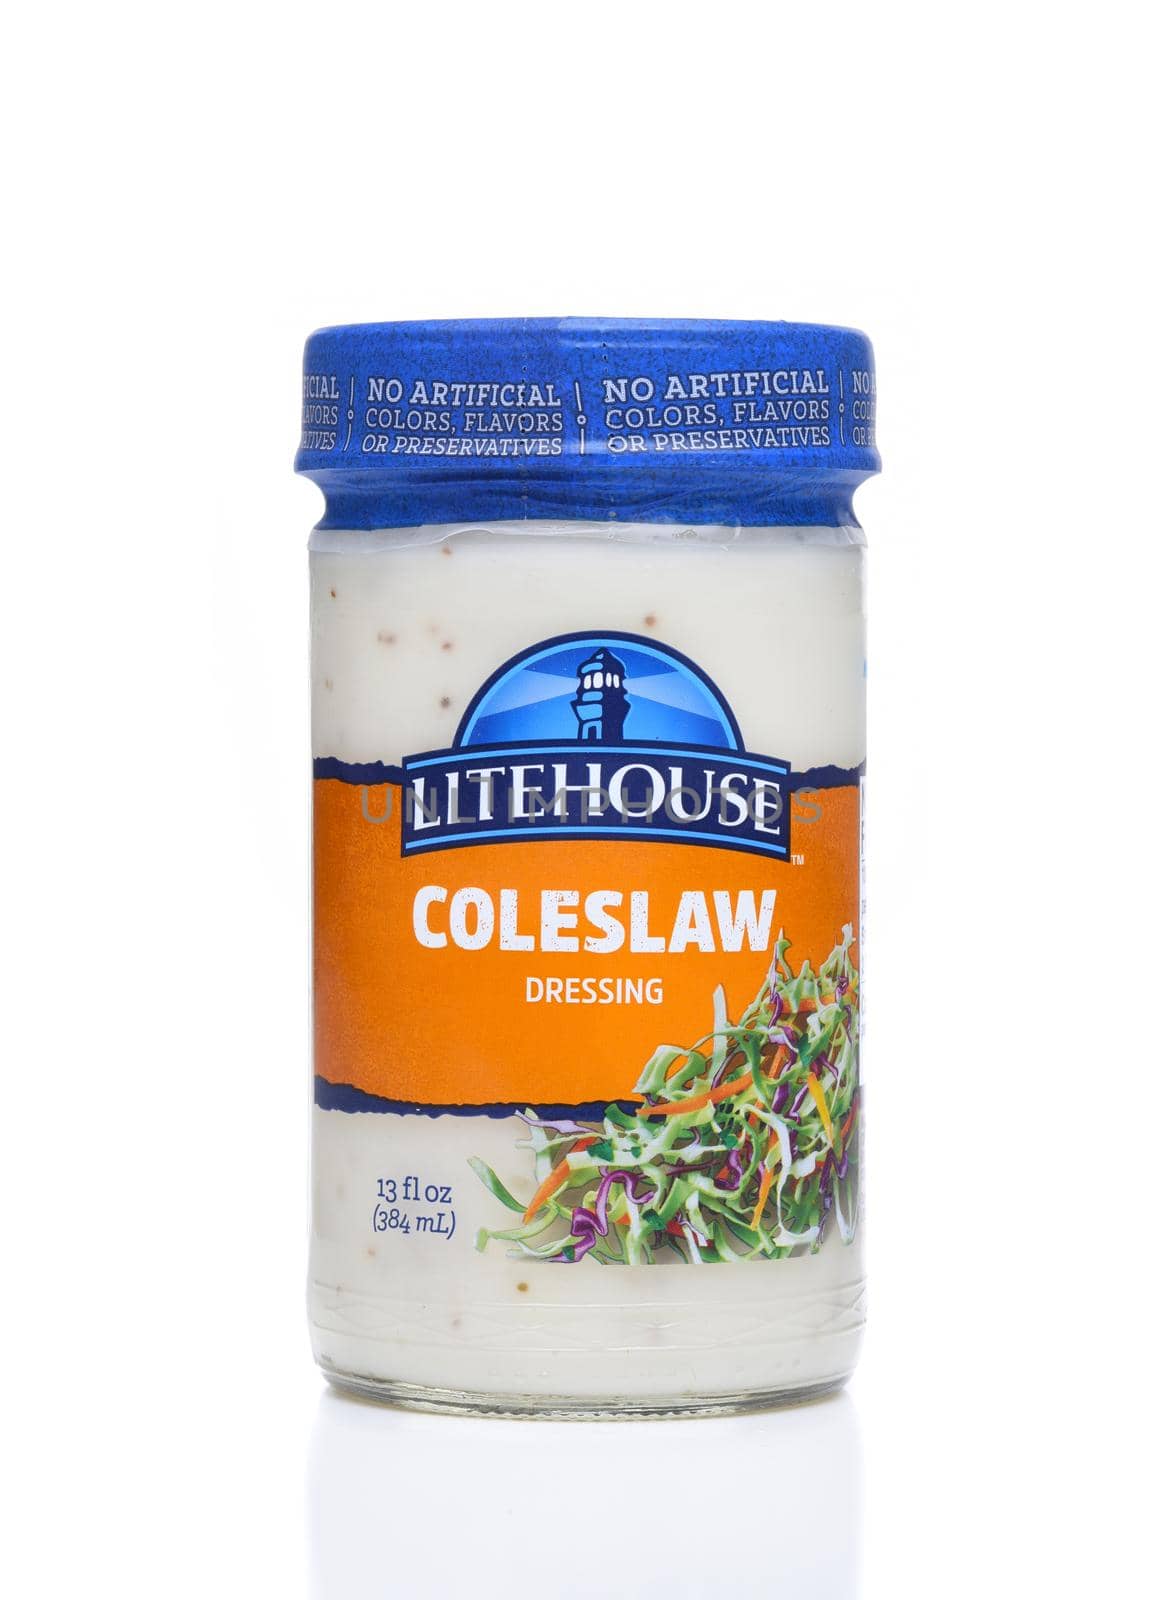 A jar of Litehouse Coleslaw Dressing by sCukrov